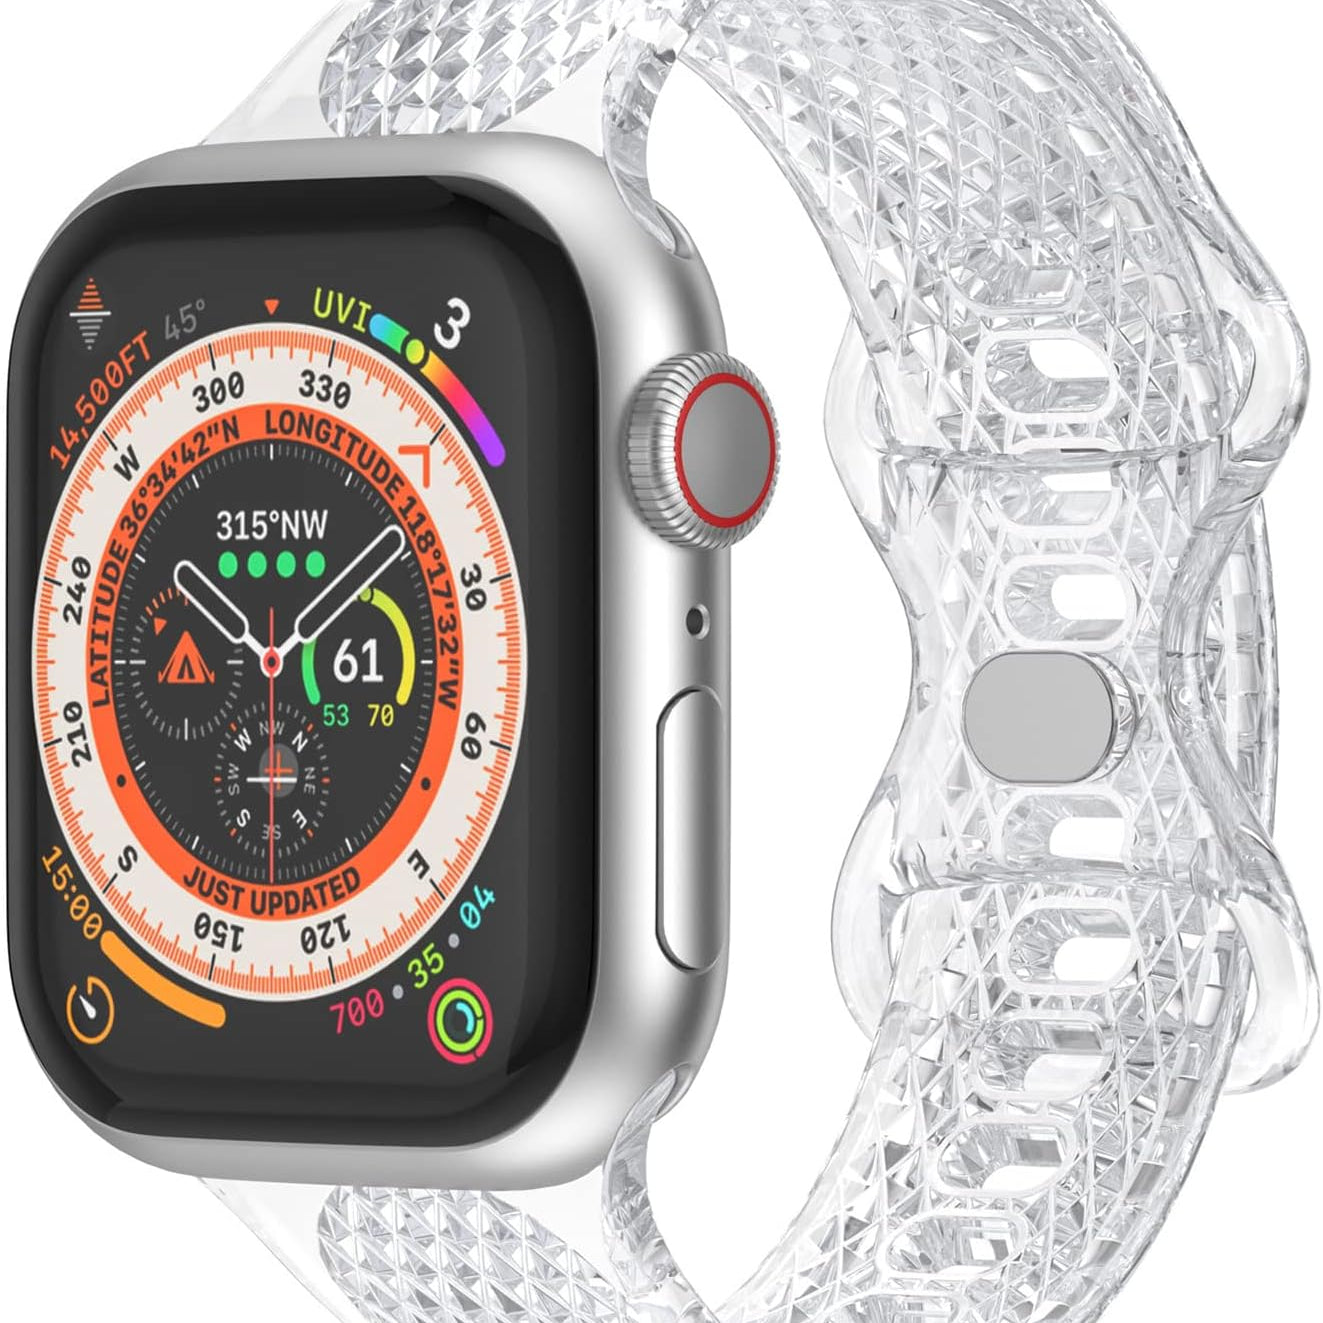 Correa deportiva de silicona ClearGlide JellyGroove para Apple Watch, varios colores disponibles